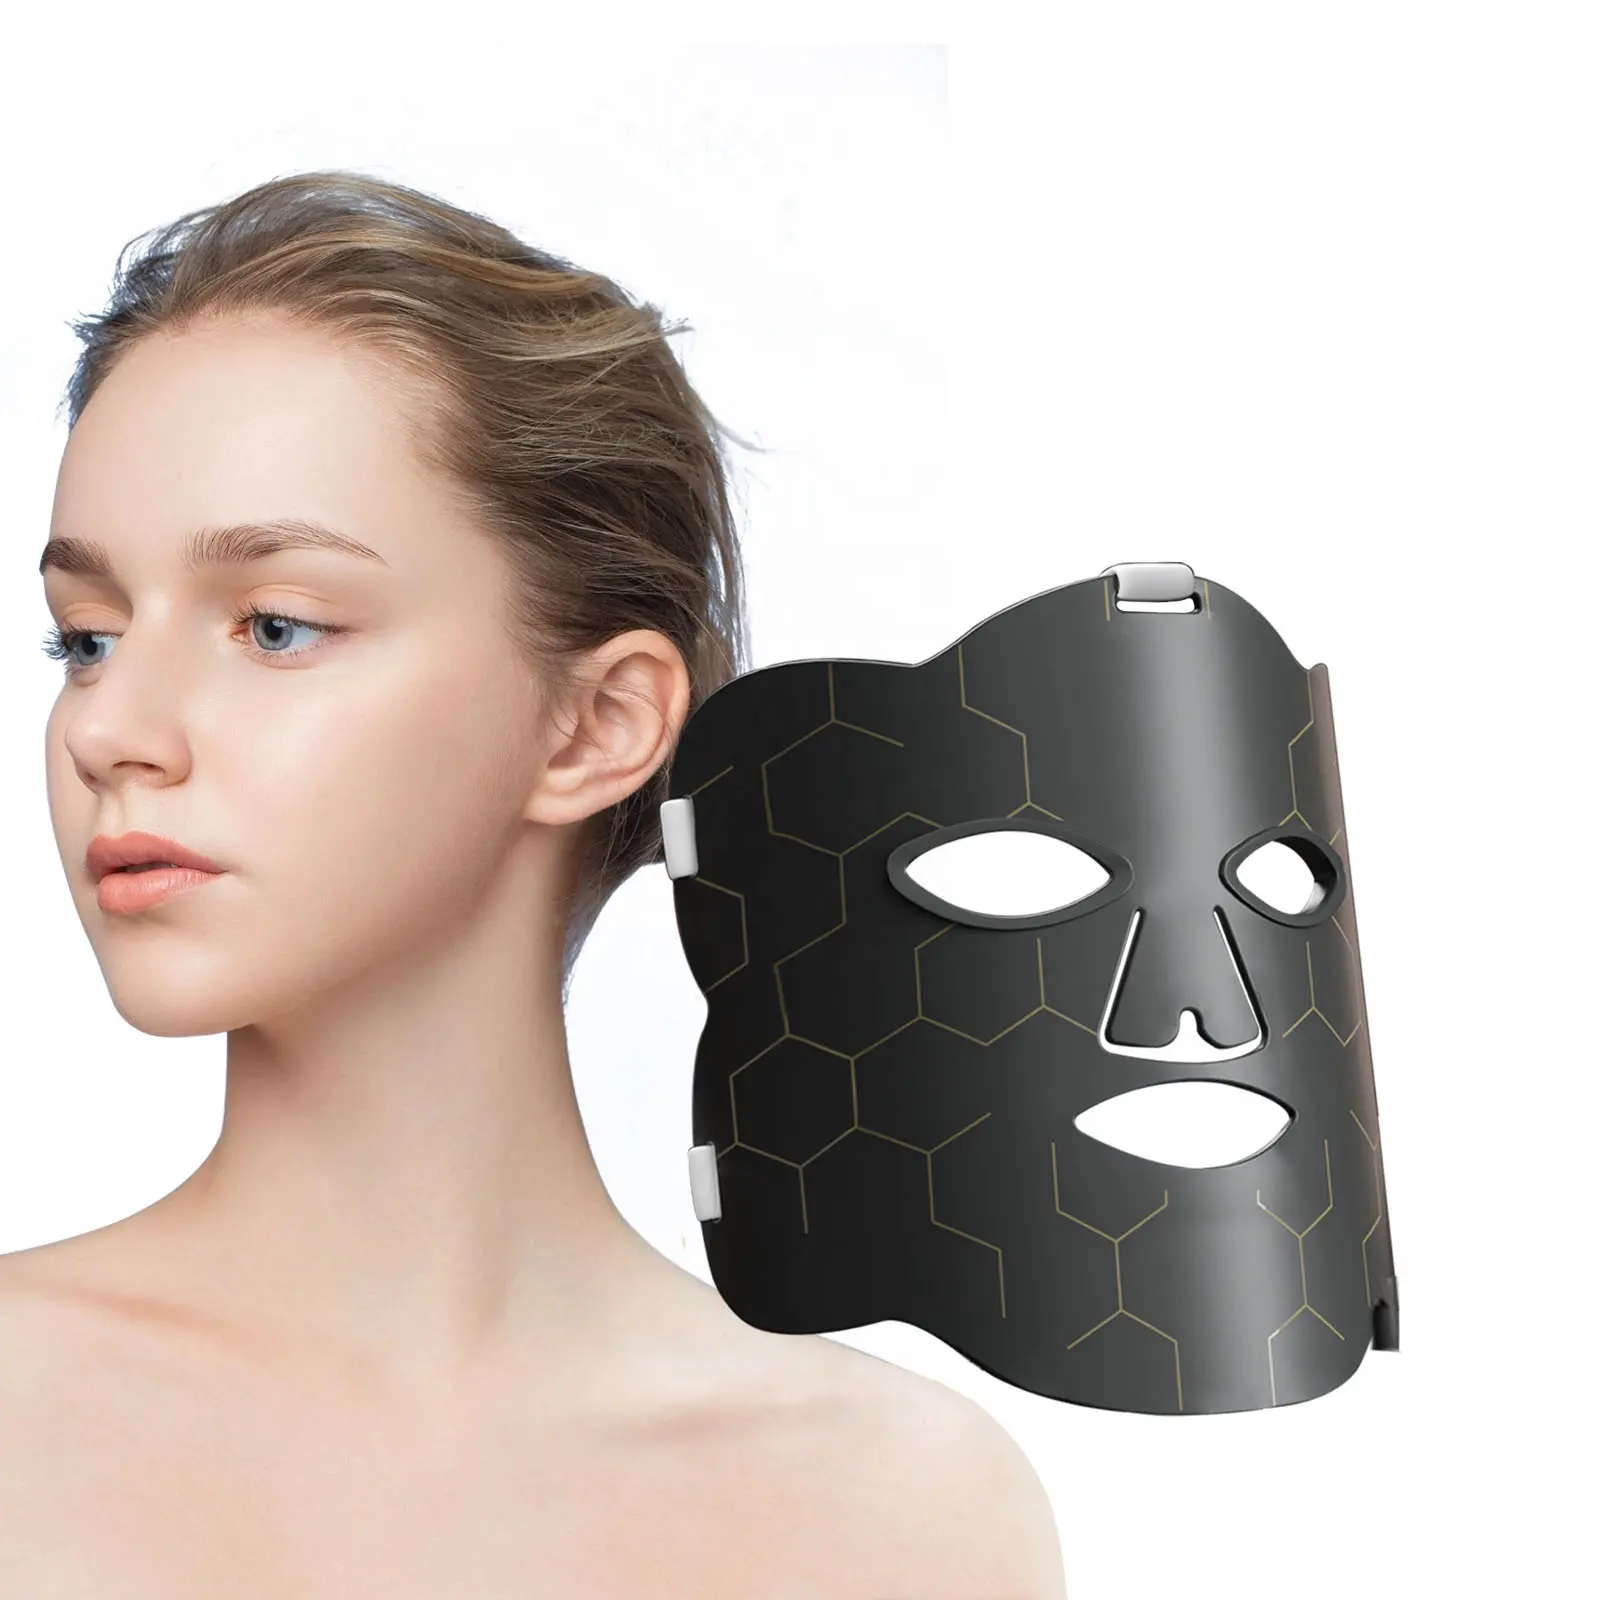 Masker LED wajah biophototerapi, peralatan kecantikan Pdt merah inframerah foton LED, masker diode pemancar cahaya wajah